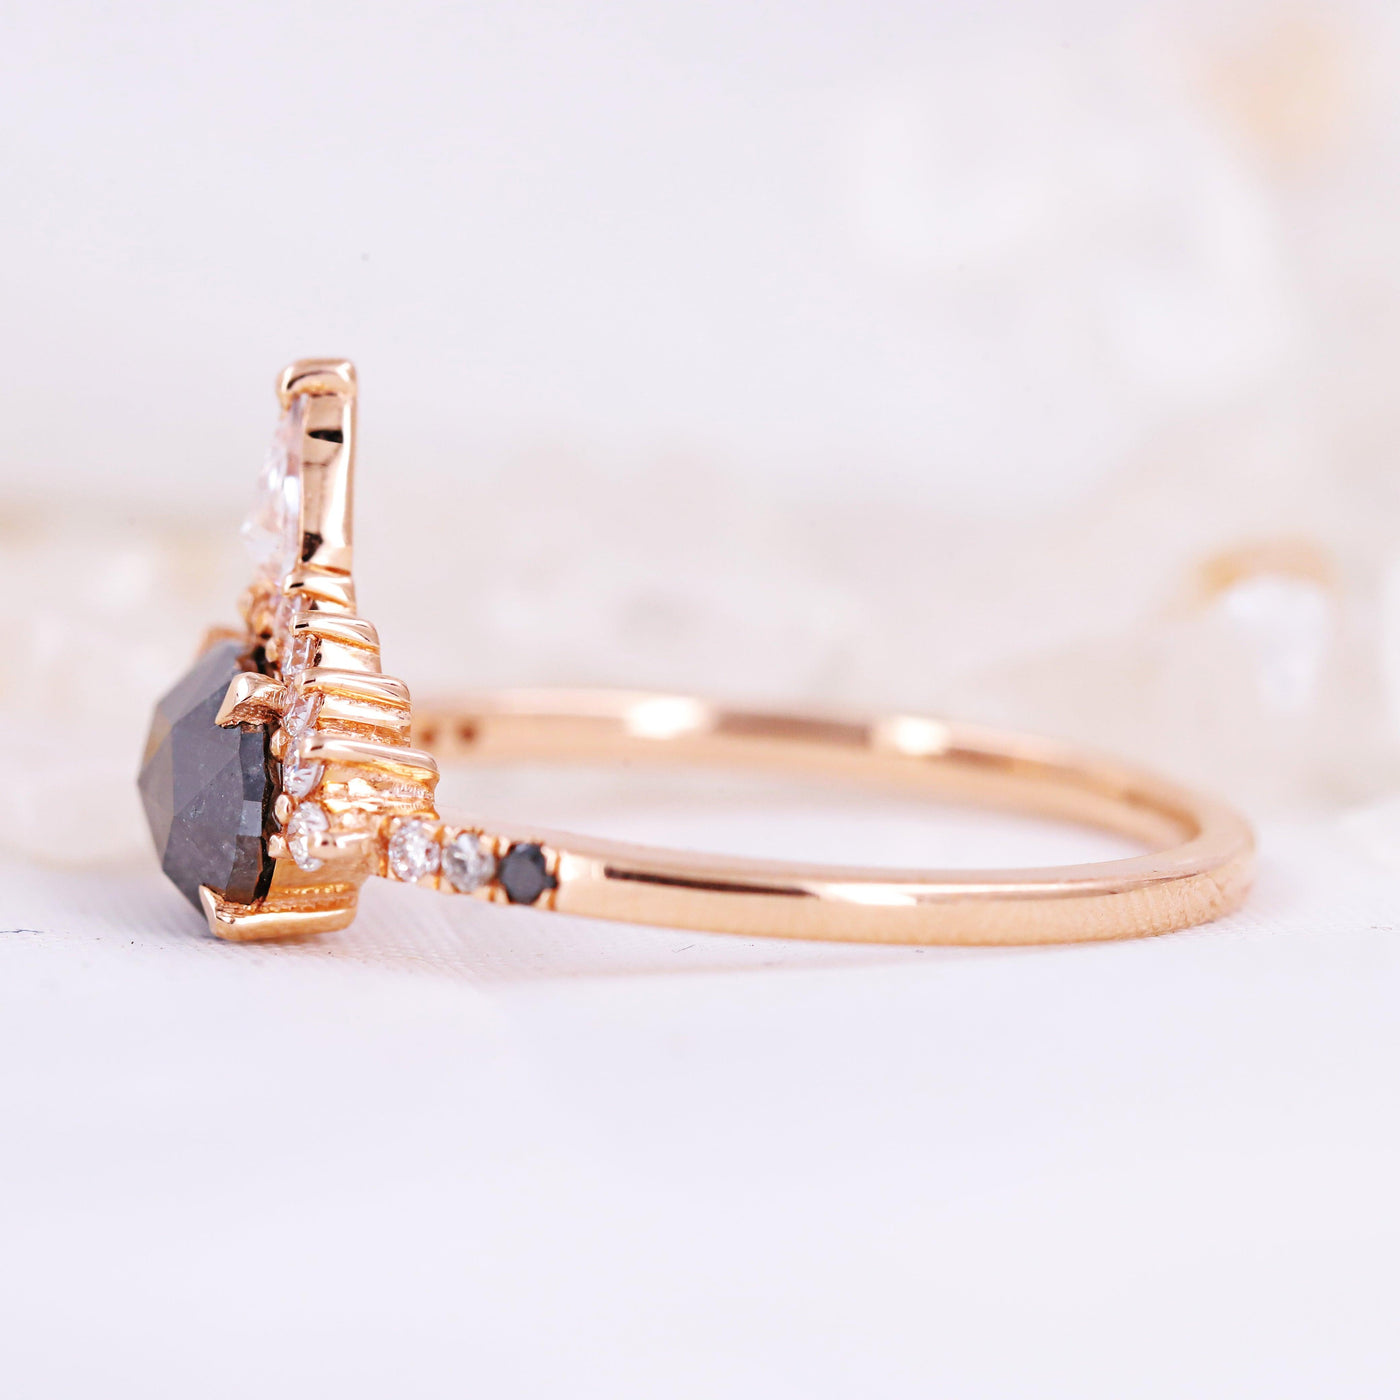 Salt and Pepper Diamond Ring | Engagement Ring| Marquise Diamond Ring - Rubysta